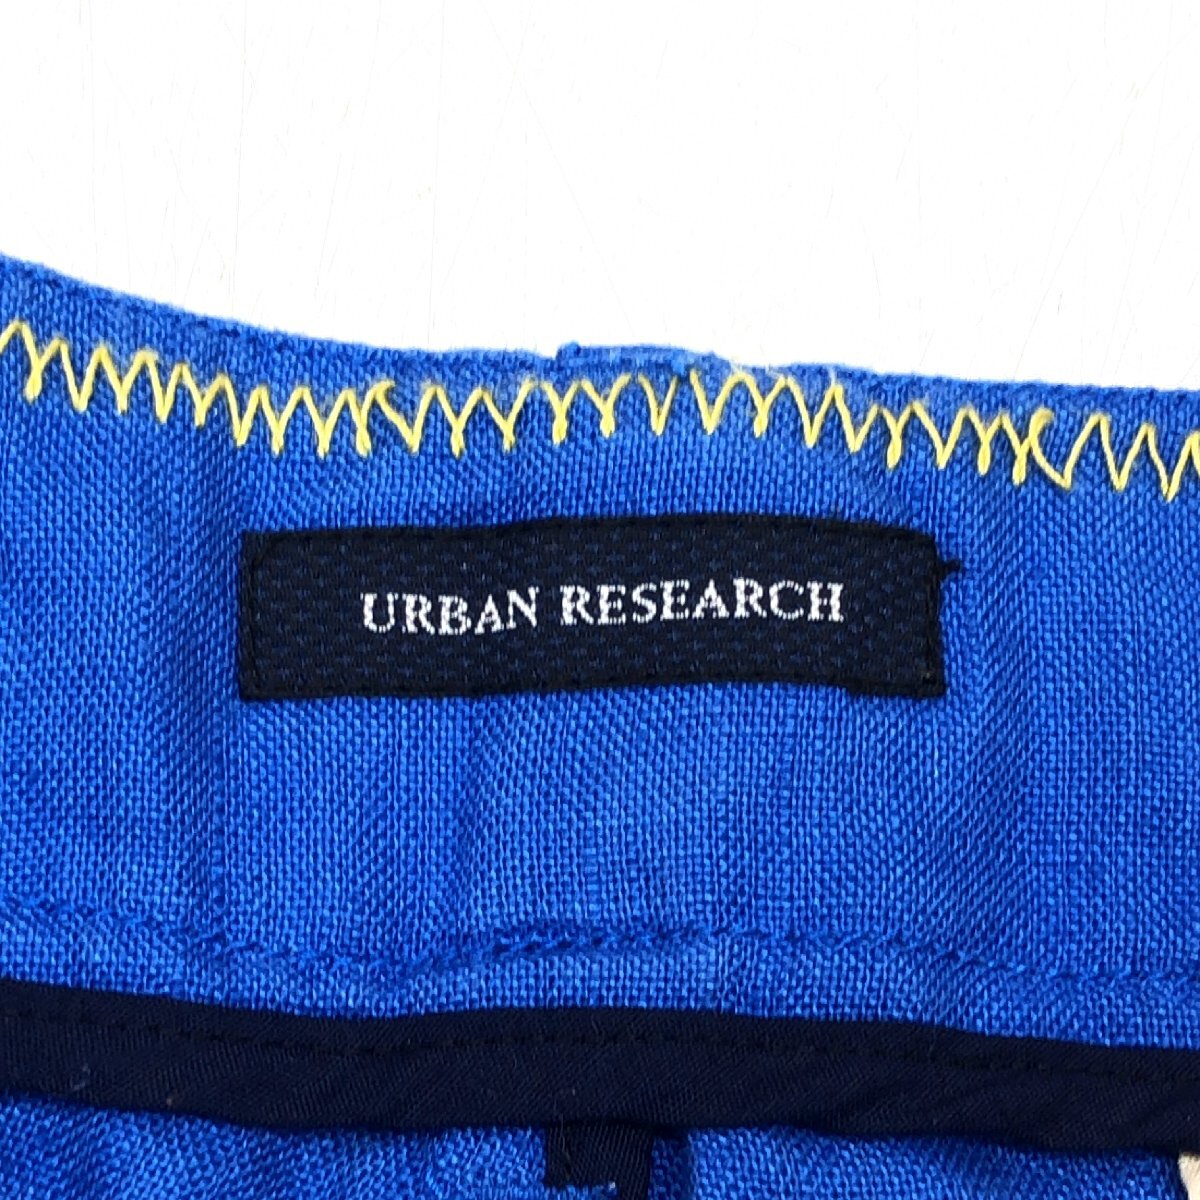 URBAN RESEARCH アーバンリサーチ 麻 リネン100% クロップド パンツ 40(L) 青 ブルー スラックス カジュアル 国内正規品 メンズ 紳士_画像3